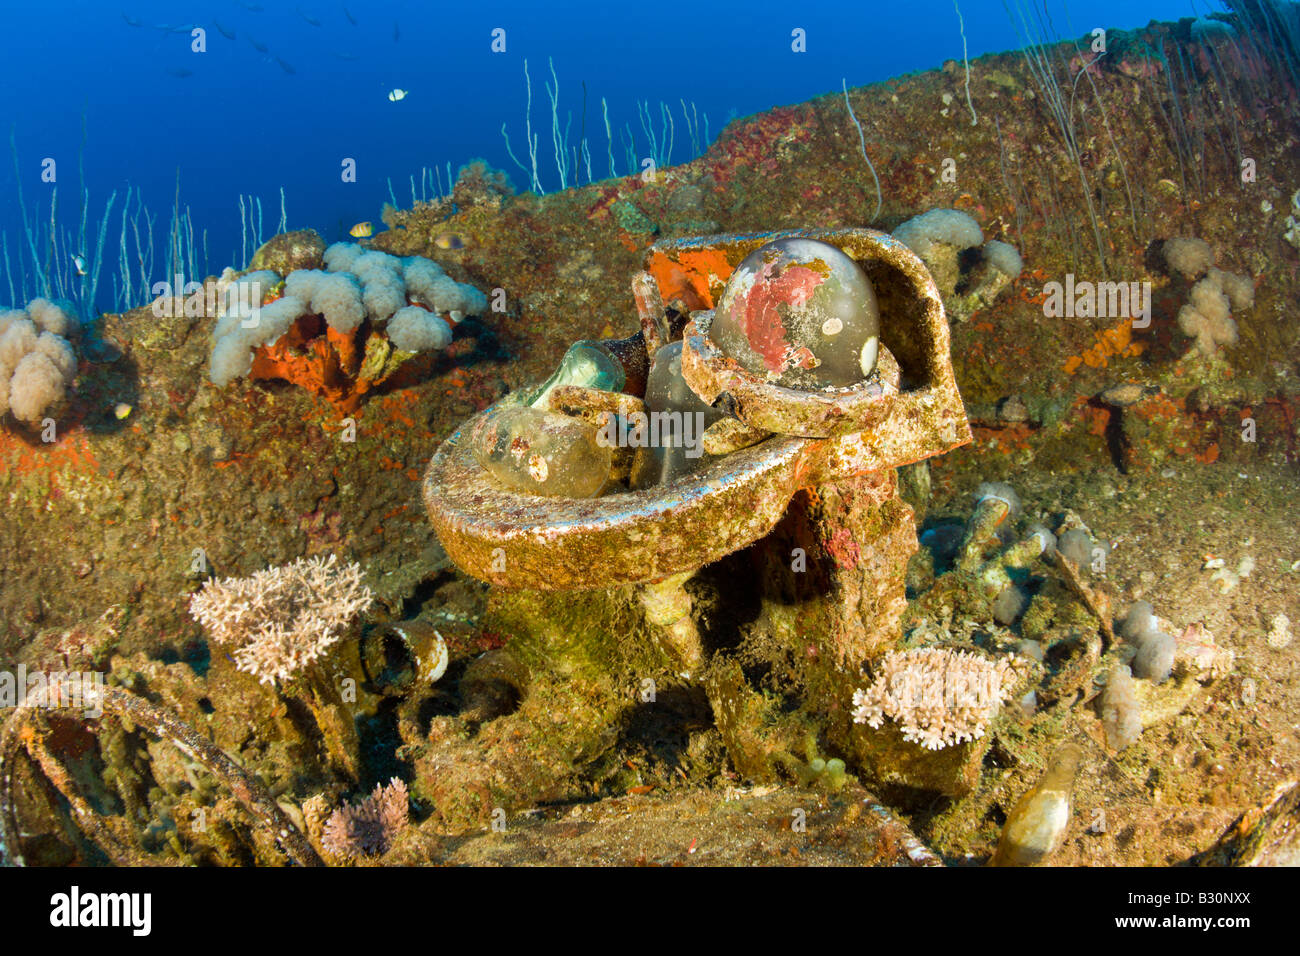 Artefakte im Wrack der USS Carlisle Angriff Transporter Marshallinseln Bikini Atoll Mikronesien Pazifischen Ozean Stockfoto